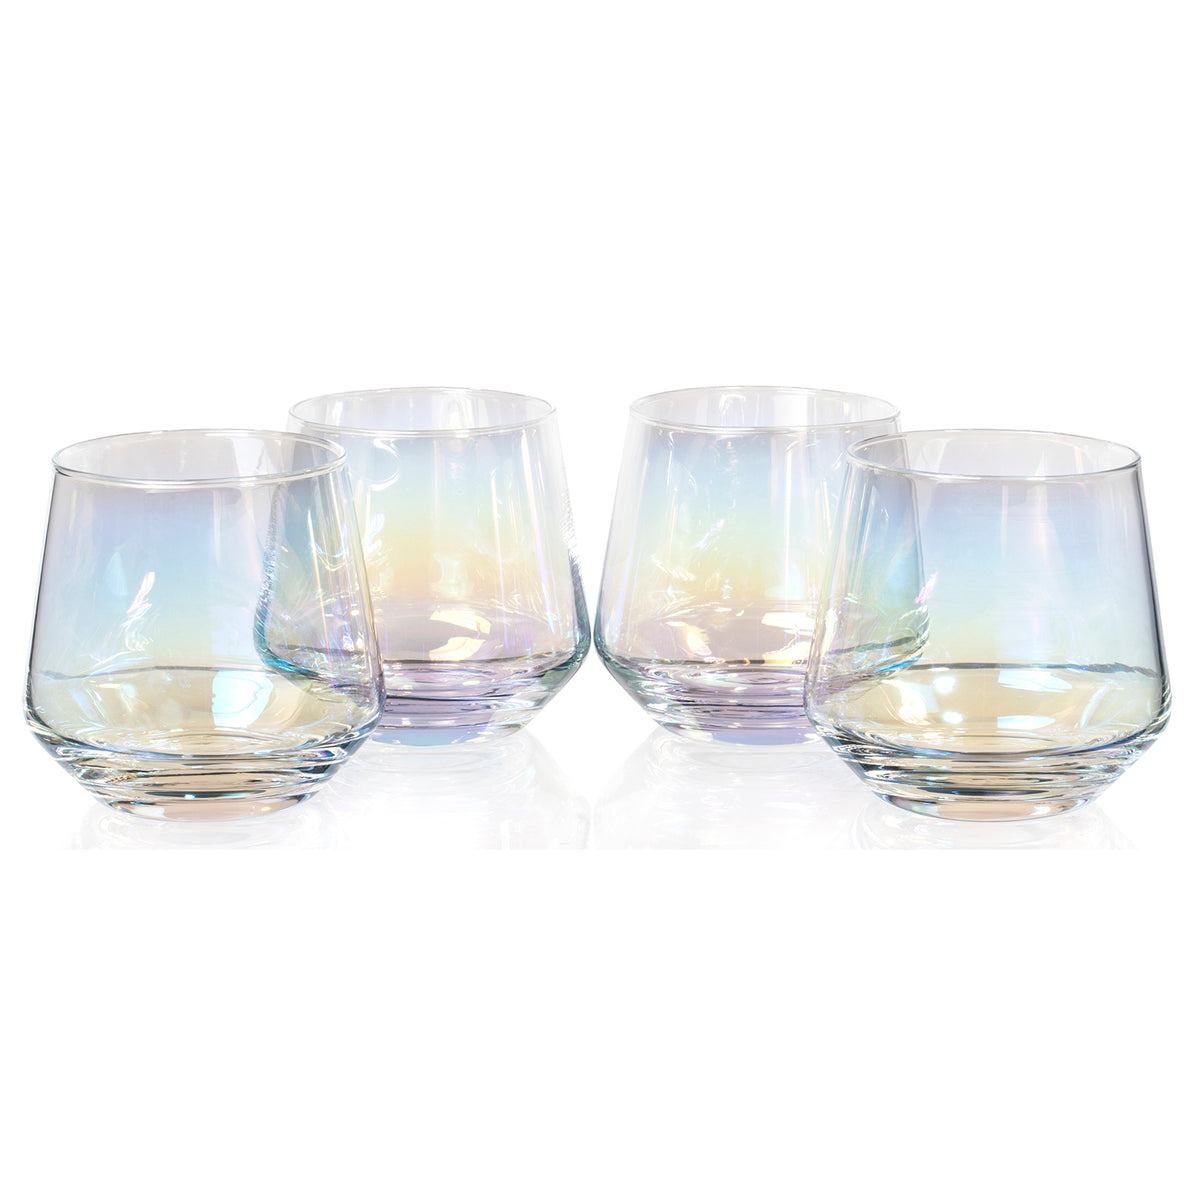 Iridescent stemless wine glasses set of 2/4/6 Unique Cute Gift Idea - Set  of 2